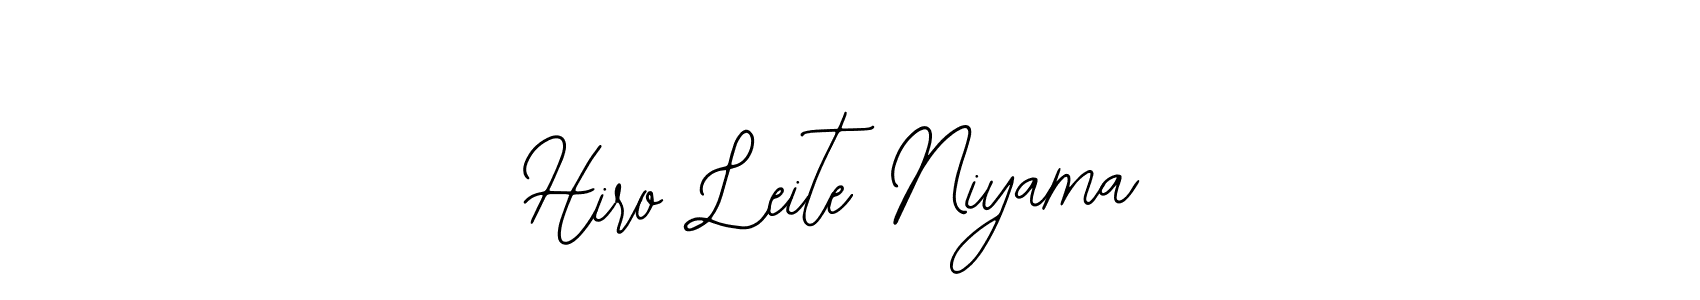 How to make Hiro Leite Niyama signature? Bearetta-2O07w is a professional autograph style. Create handwritten signature for Hiro Leite Niyama name. Hiro Leite Niyama signature style 12 images and pictures png